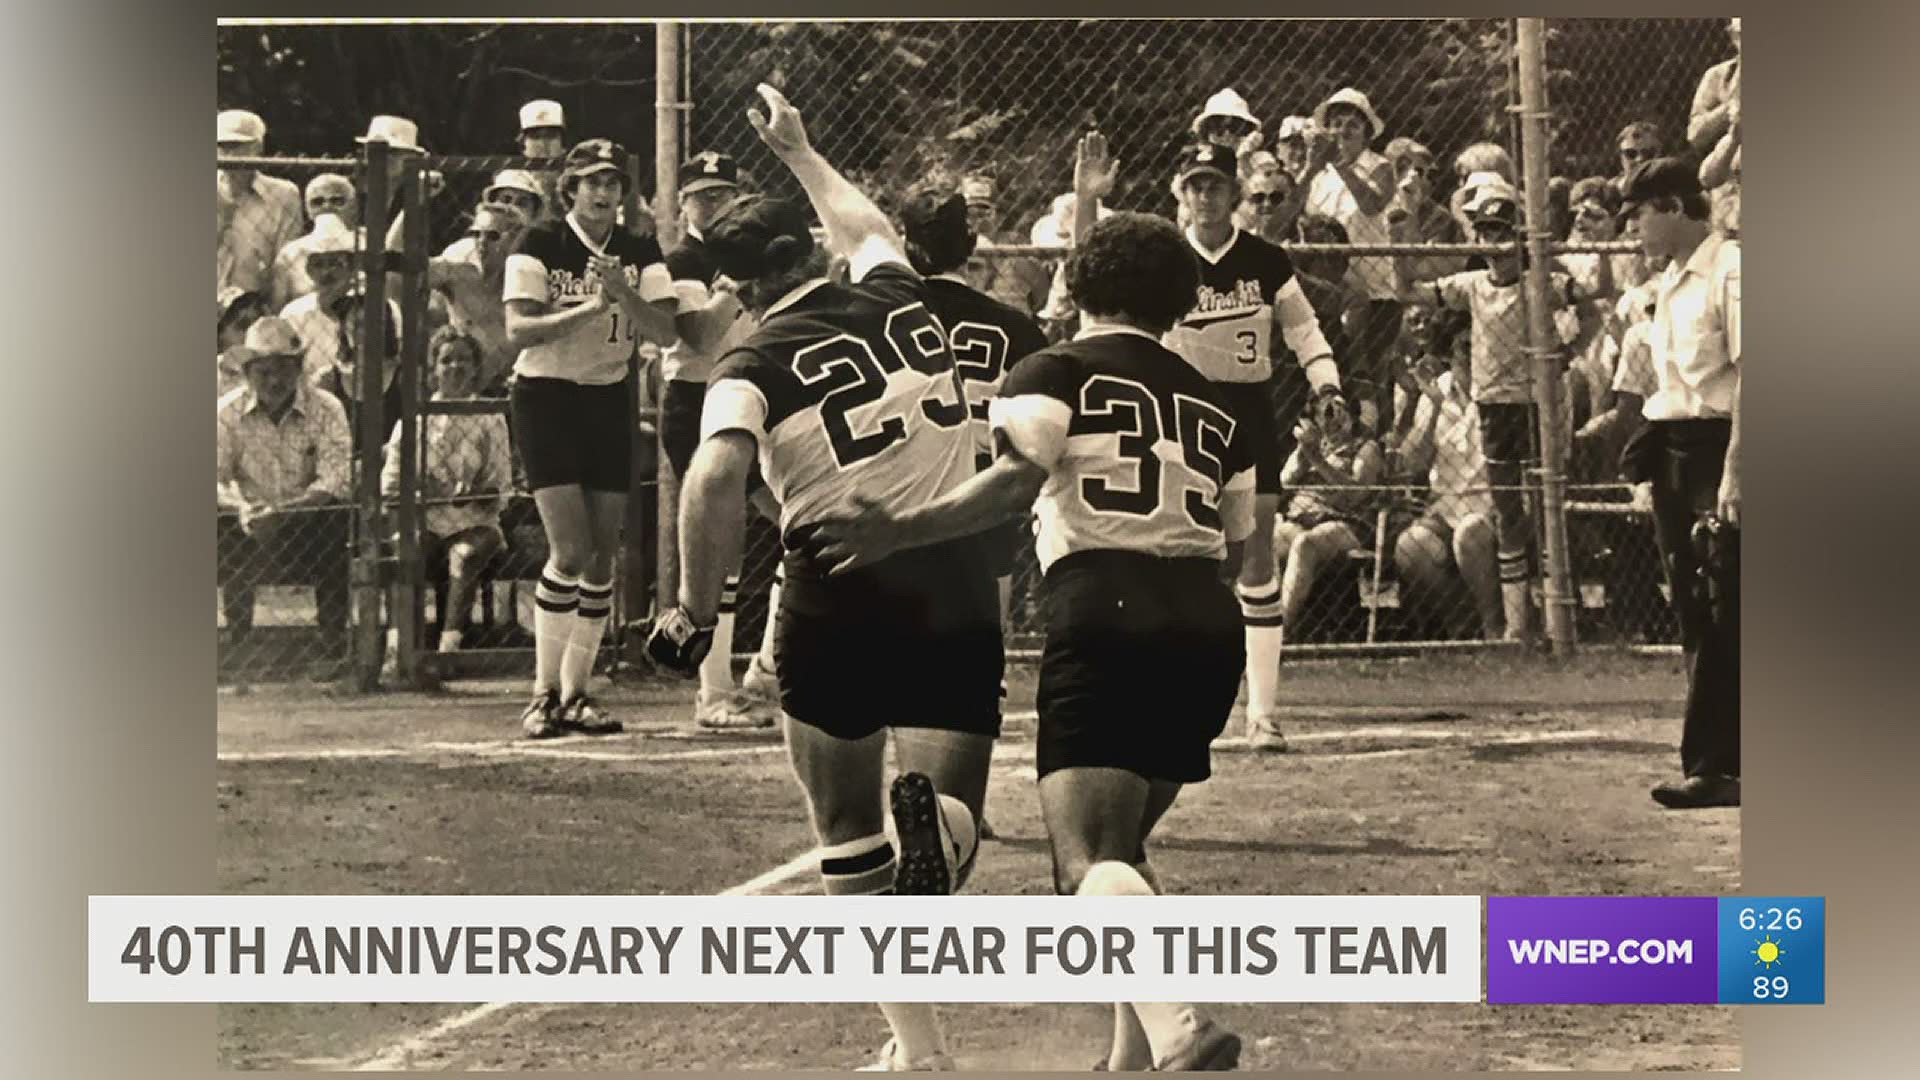 ASA State Softball Champions in 1981